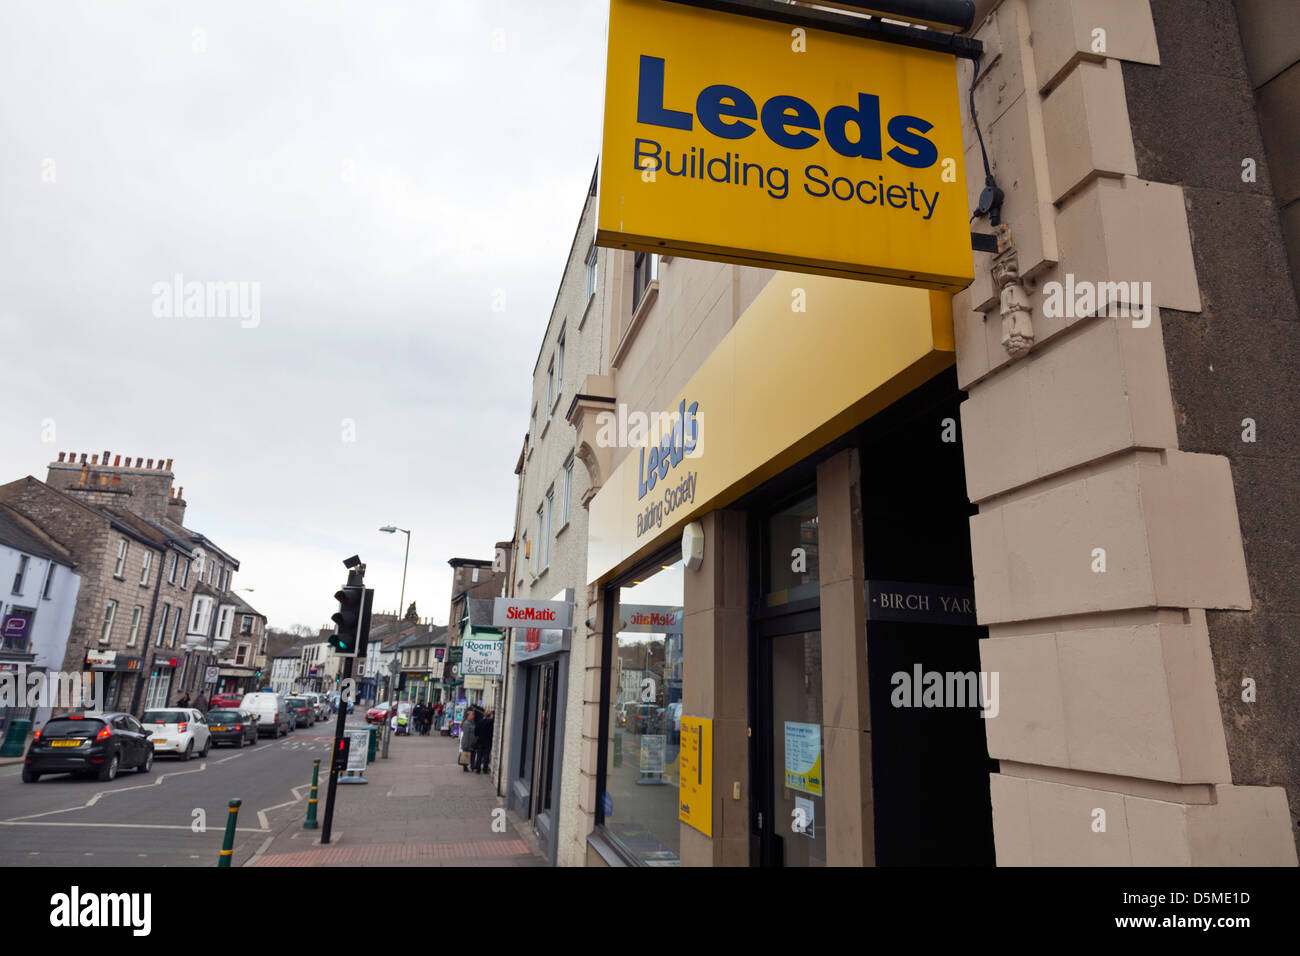 Leeds building society shop front facade sign Kendal Cumbria, UK, England Stock Photo